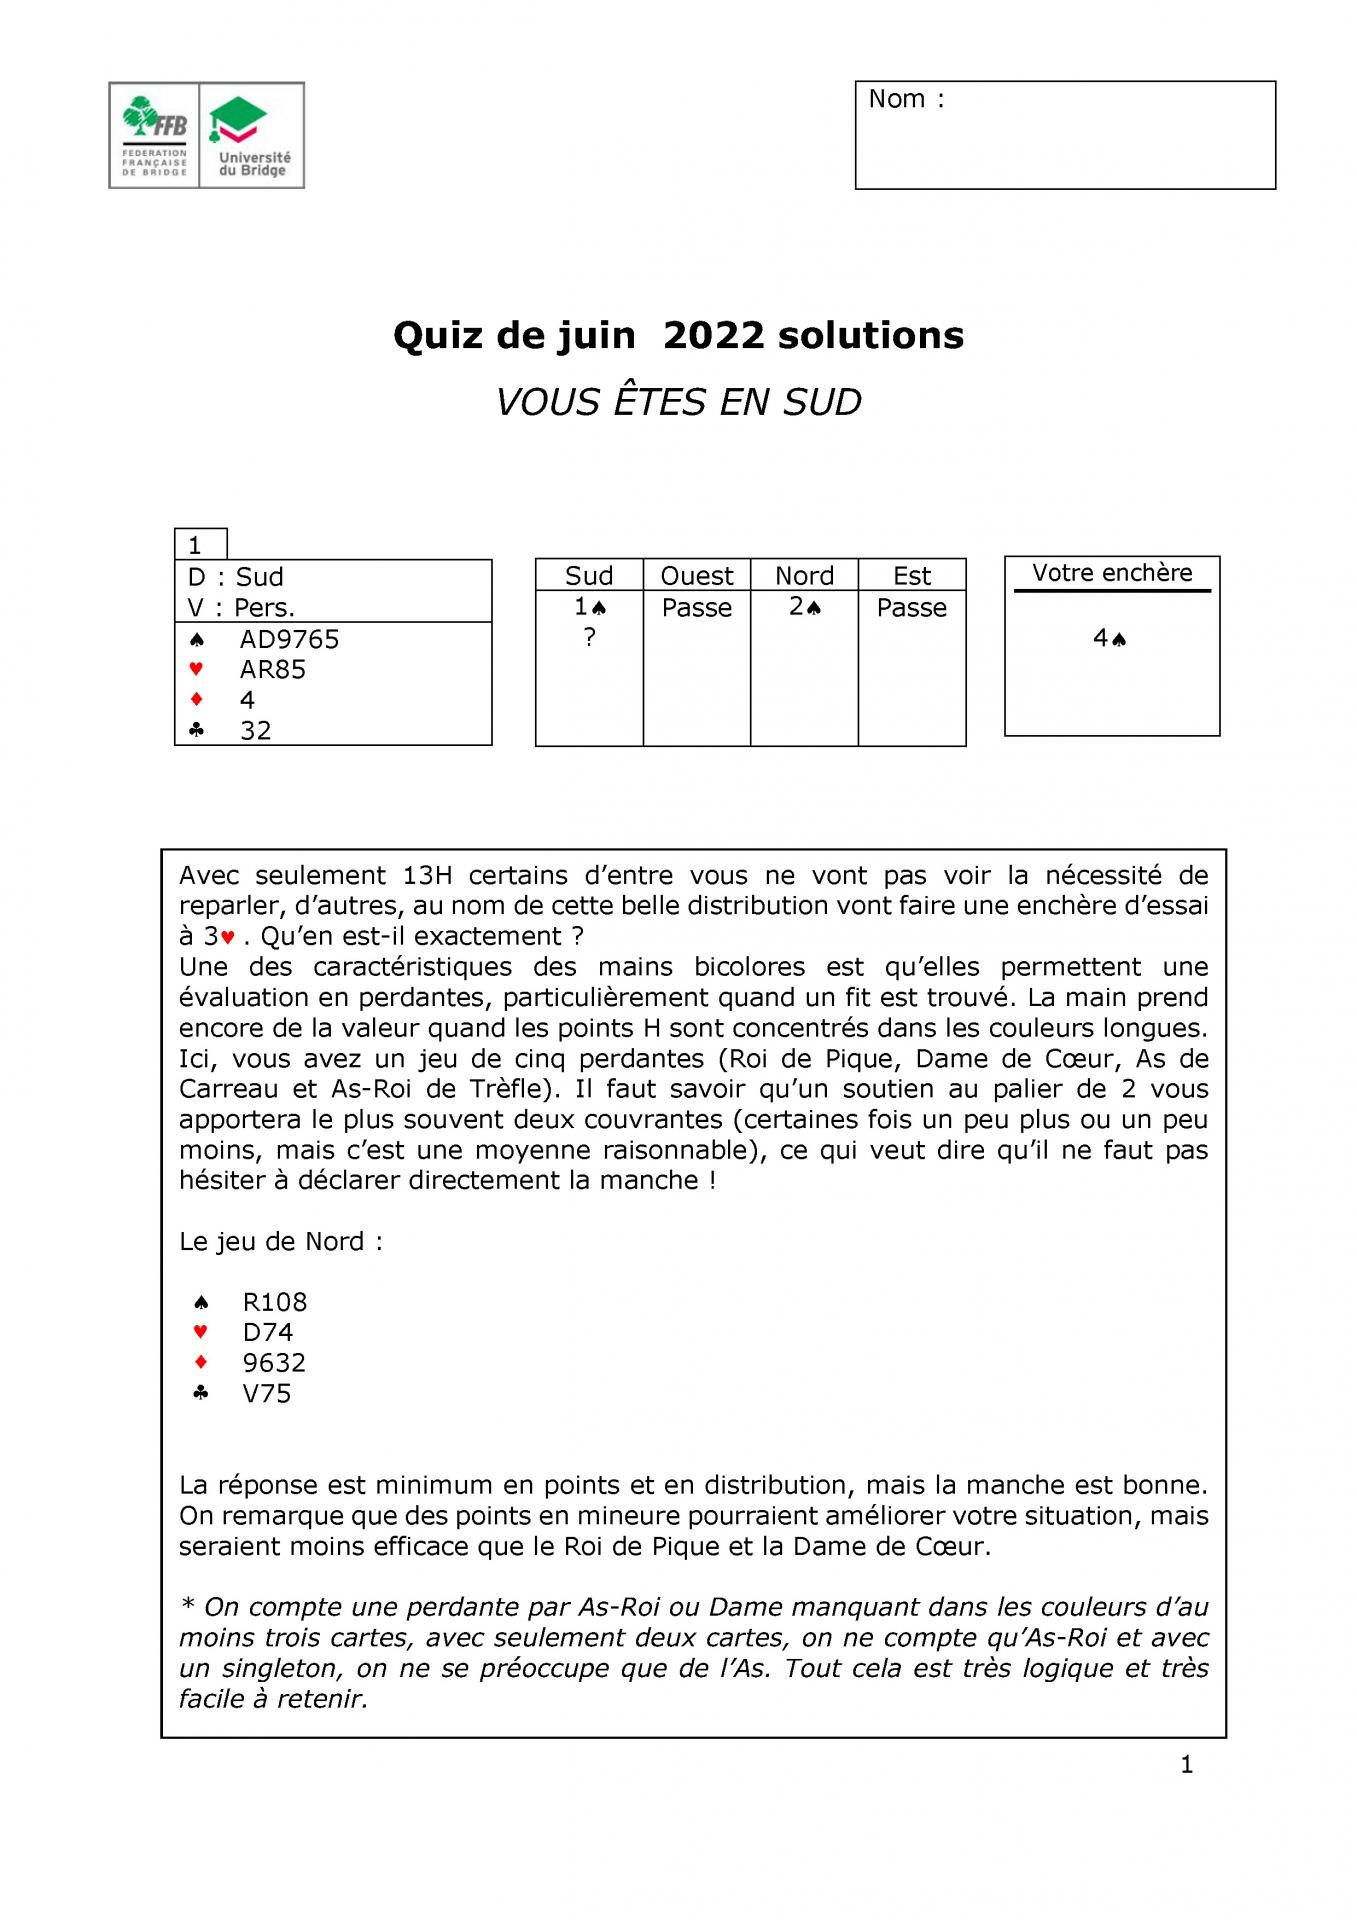 Solutions quiz moniteurs mars 2022 page 1